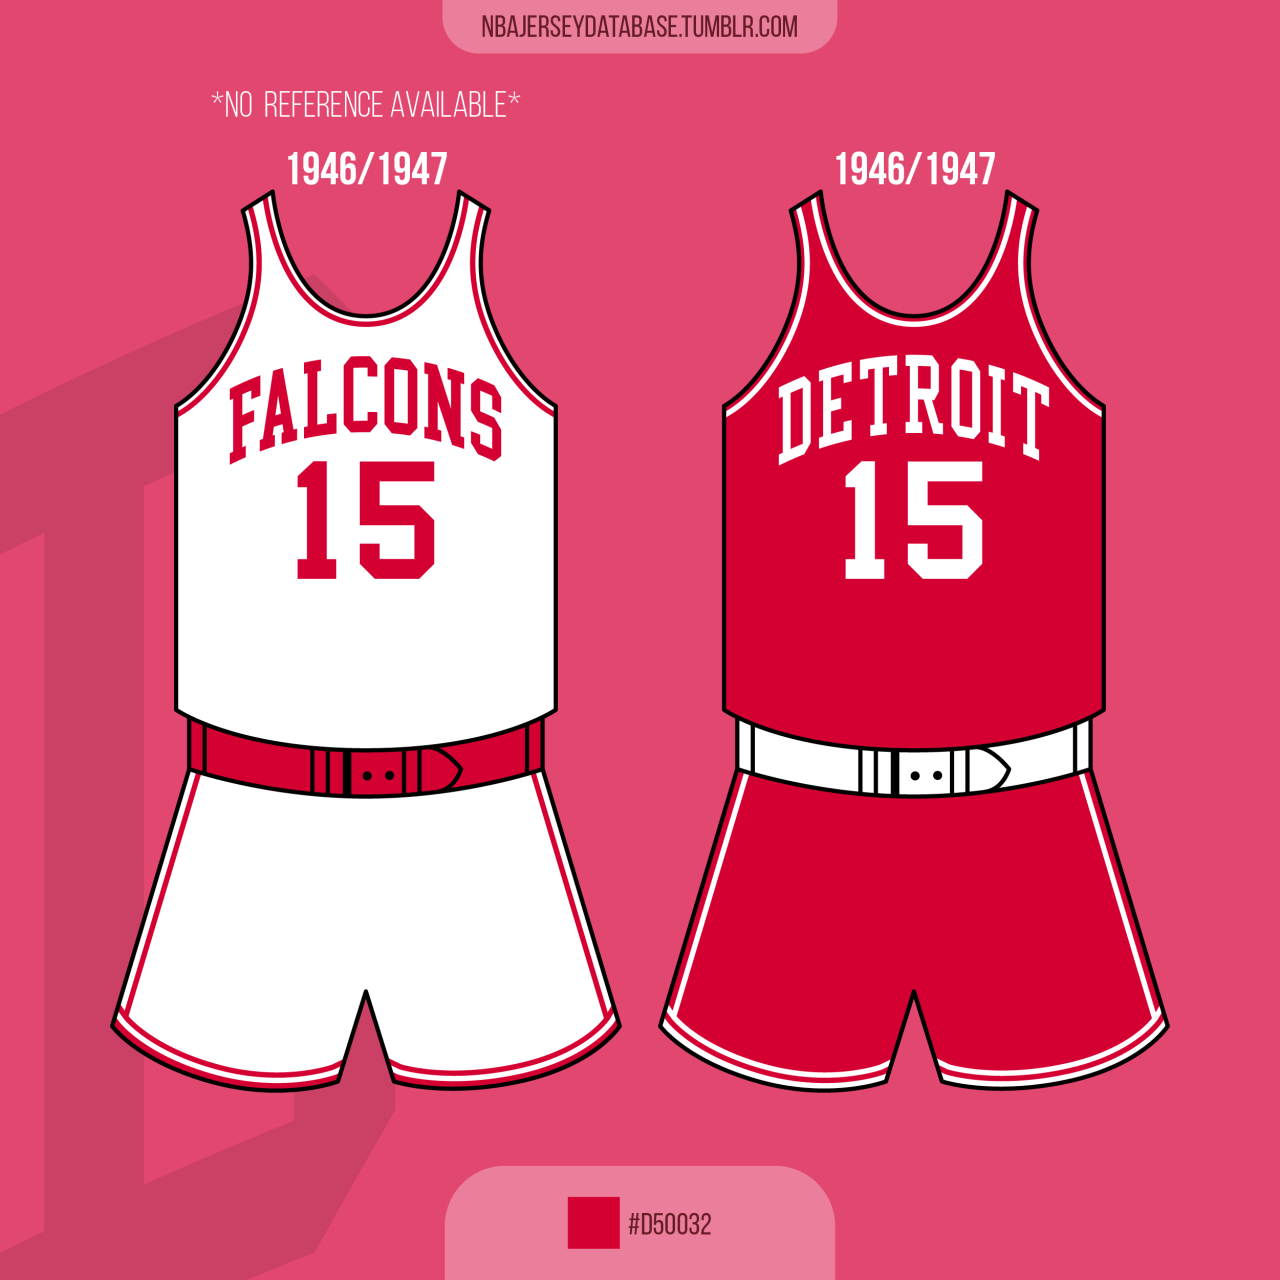 NBA Jersey Database, Detroit Falcons 1946-1947 Record: 20-40 (33%)